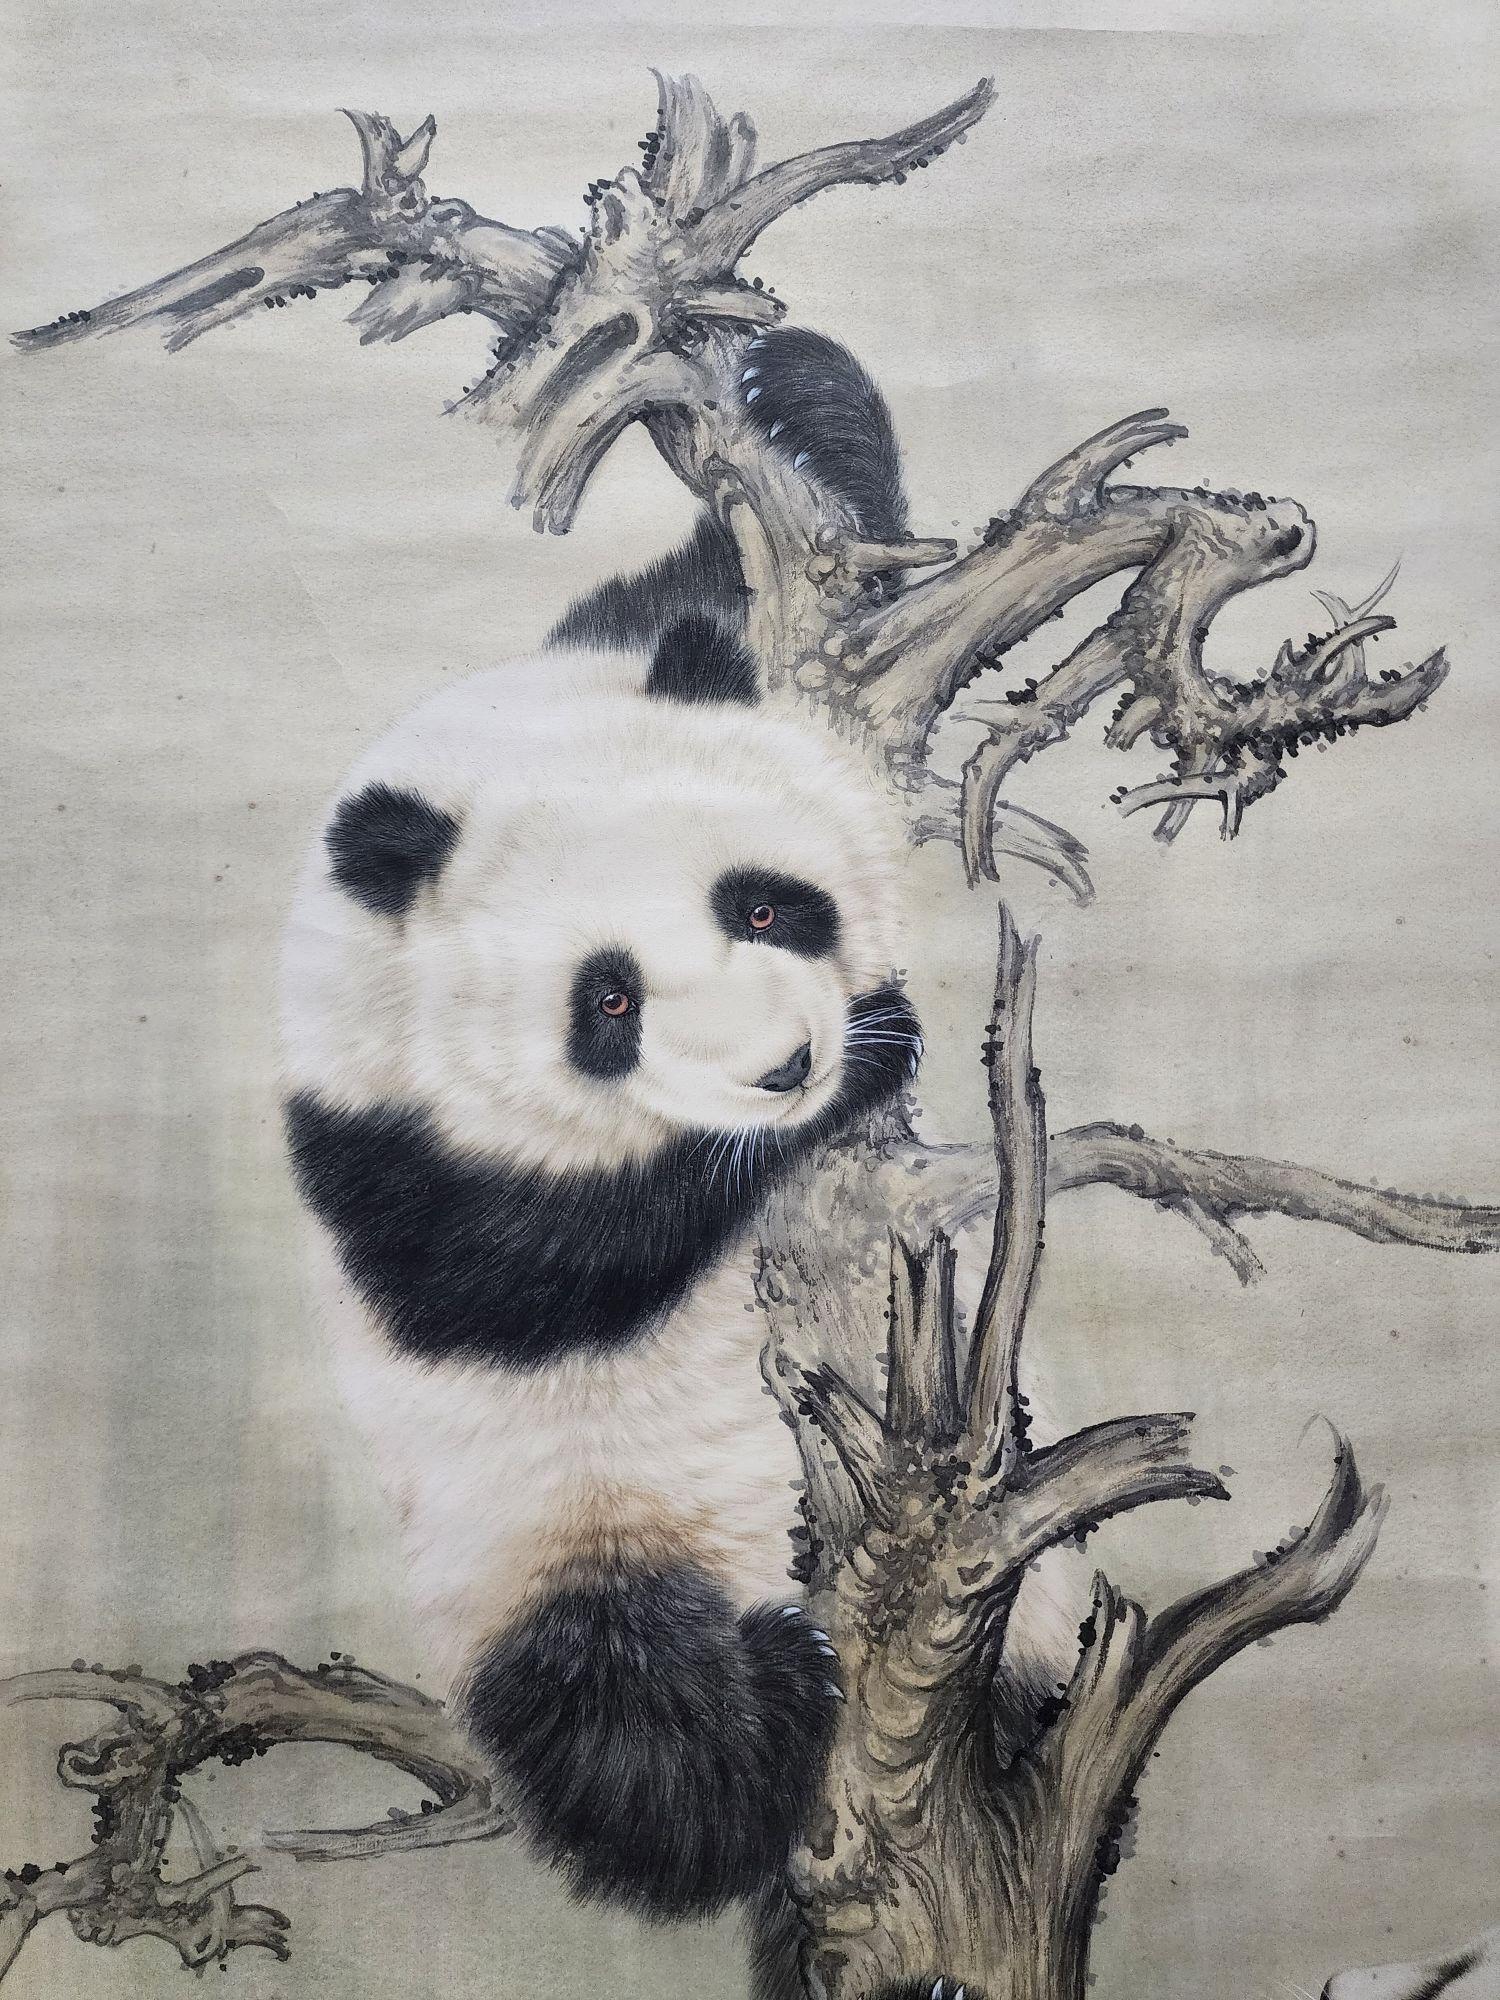 Handgemälde zweier kletternder Pandas des berühmten chinesischen Künstlers Wang Shengyong  (Chinesisch) im Angebot